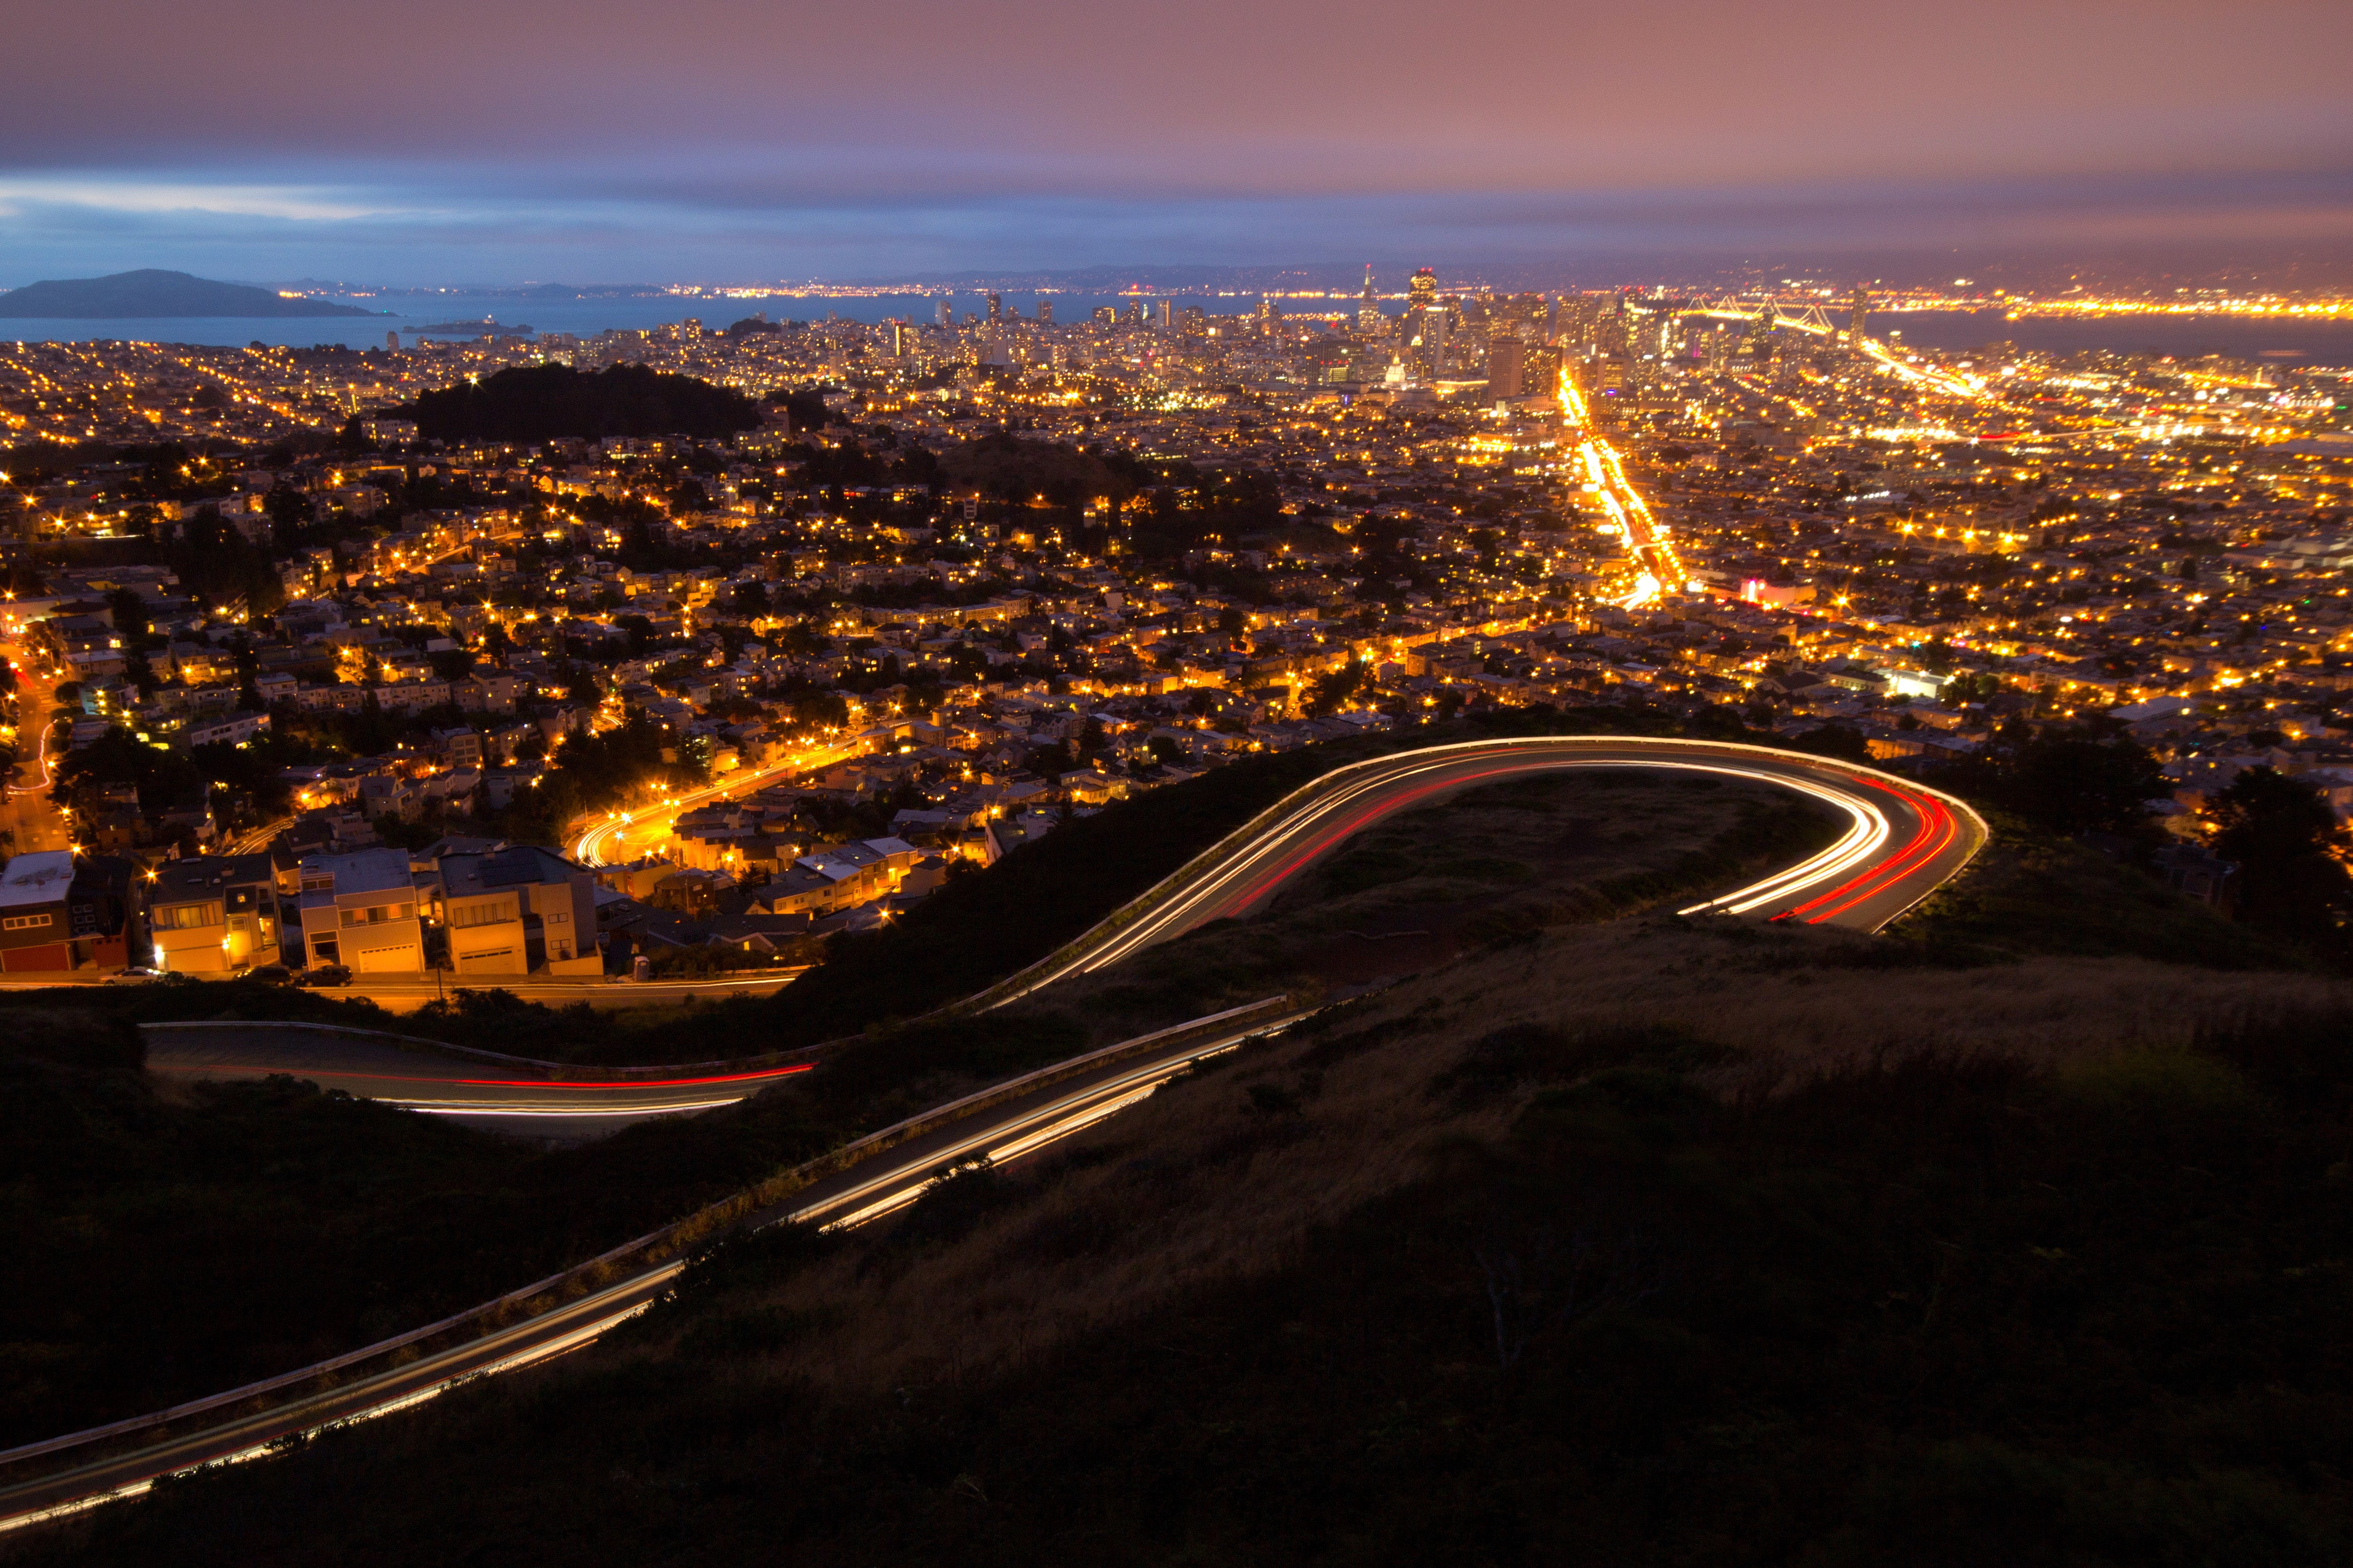 USA, California, San Francisco, city lights photography, a city